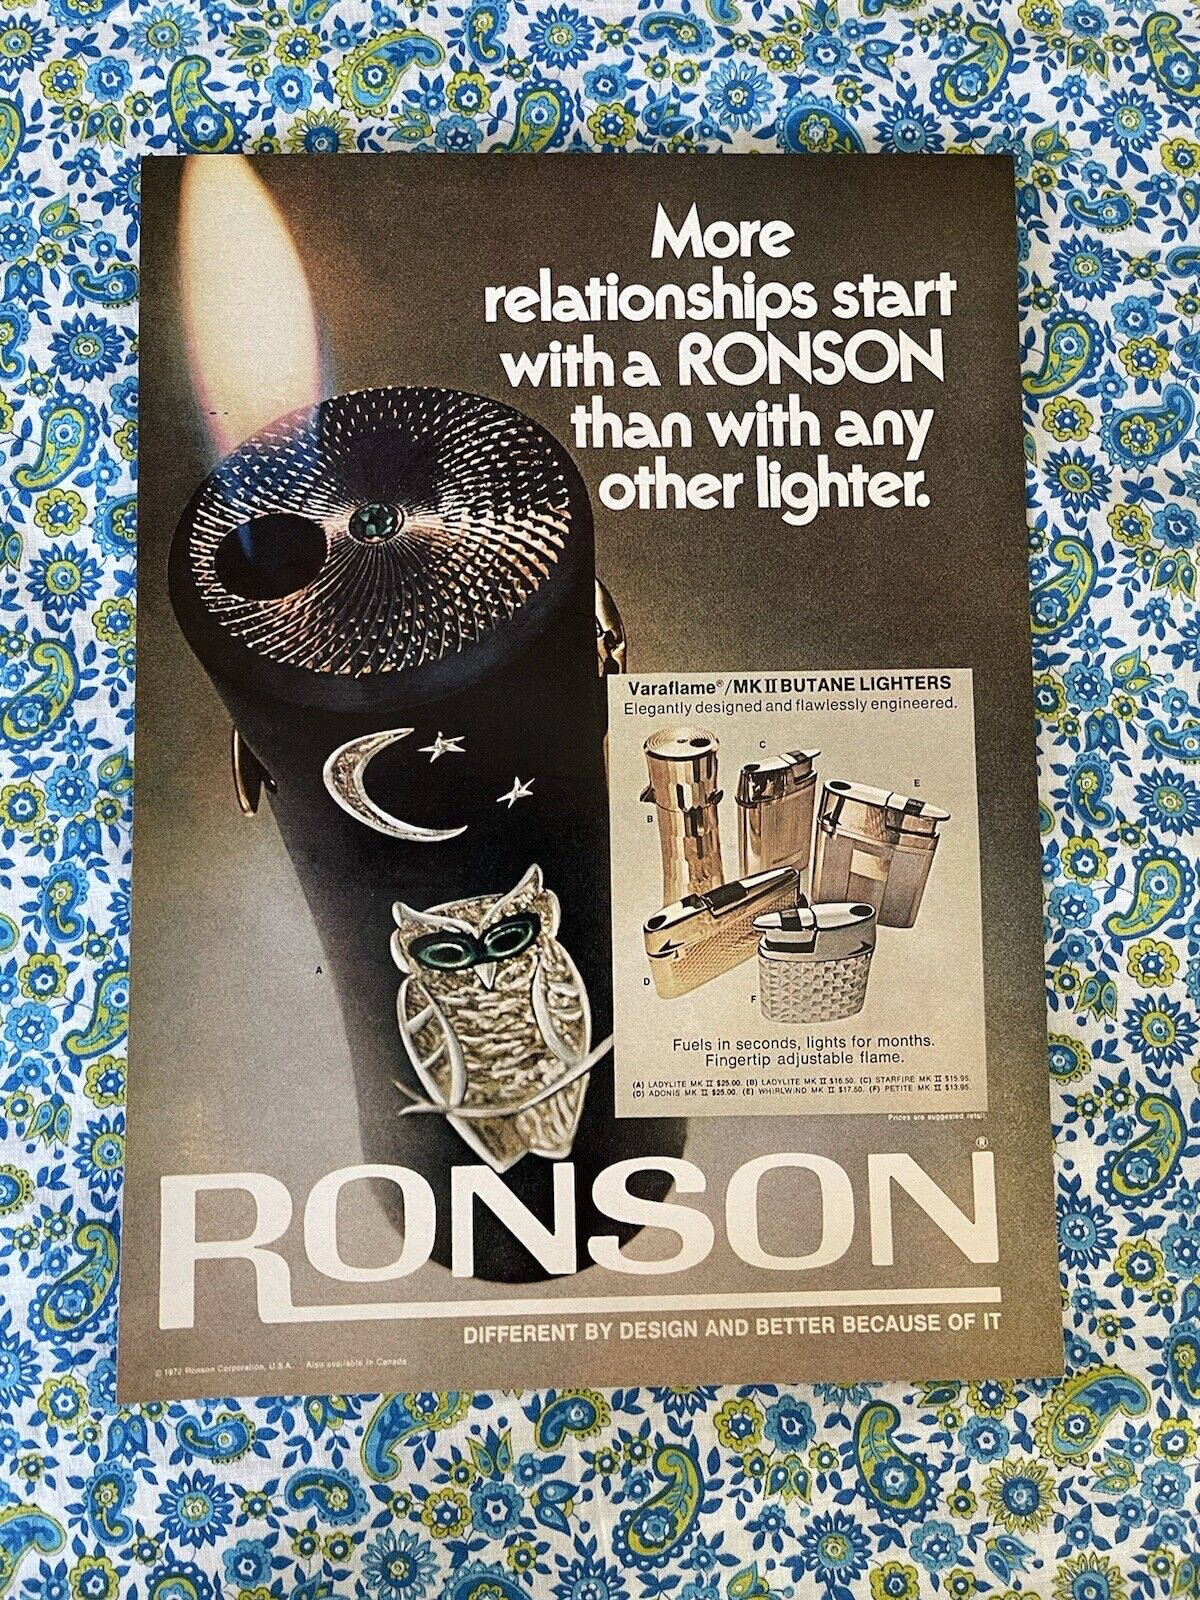 Vintage 1972 Ronson Lighter Print Ad Veraflame MK II Butane Ad Only